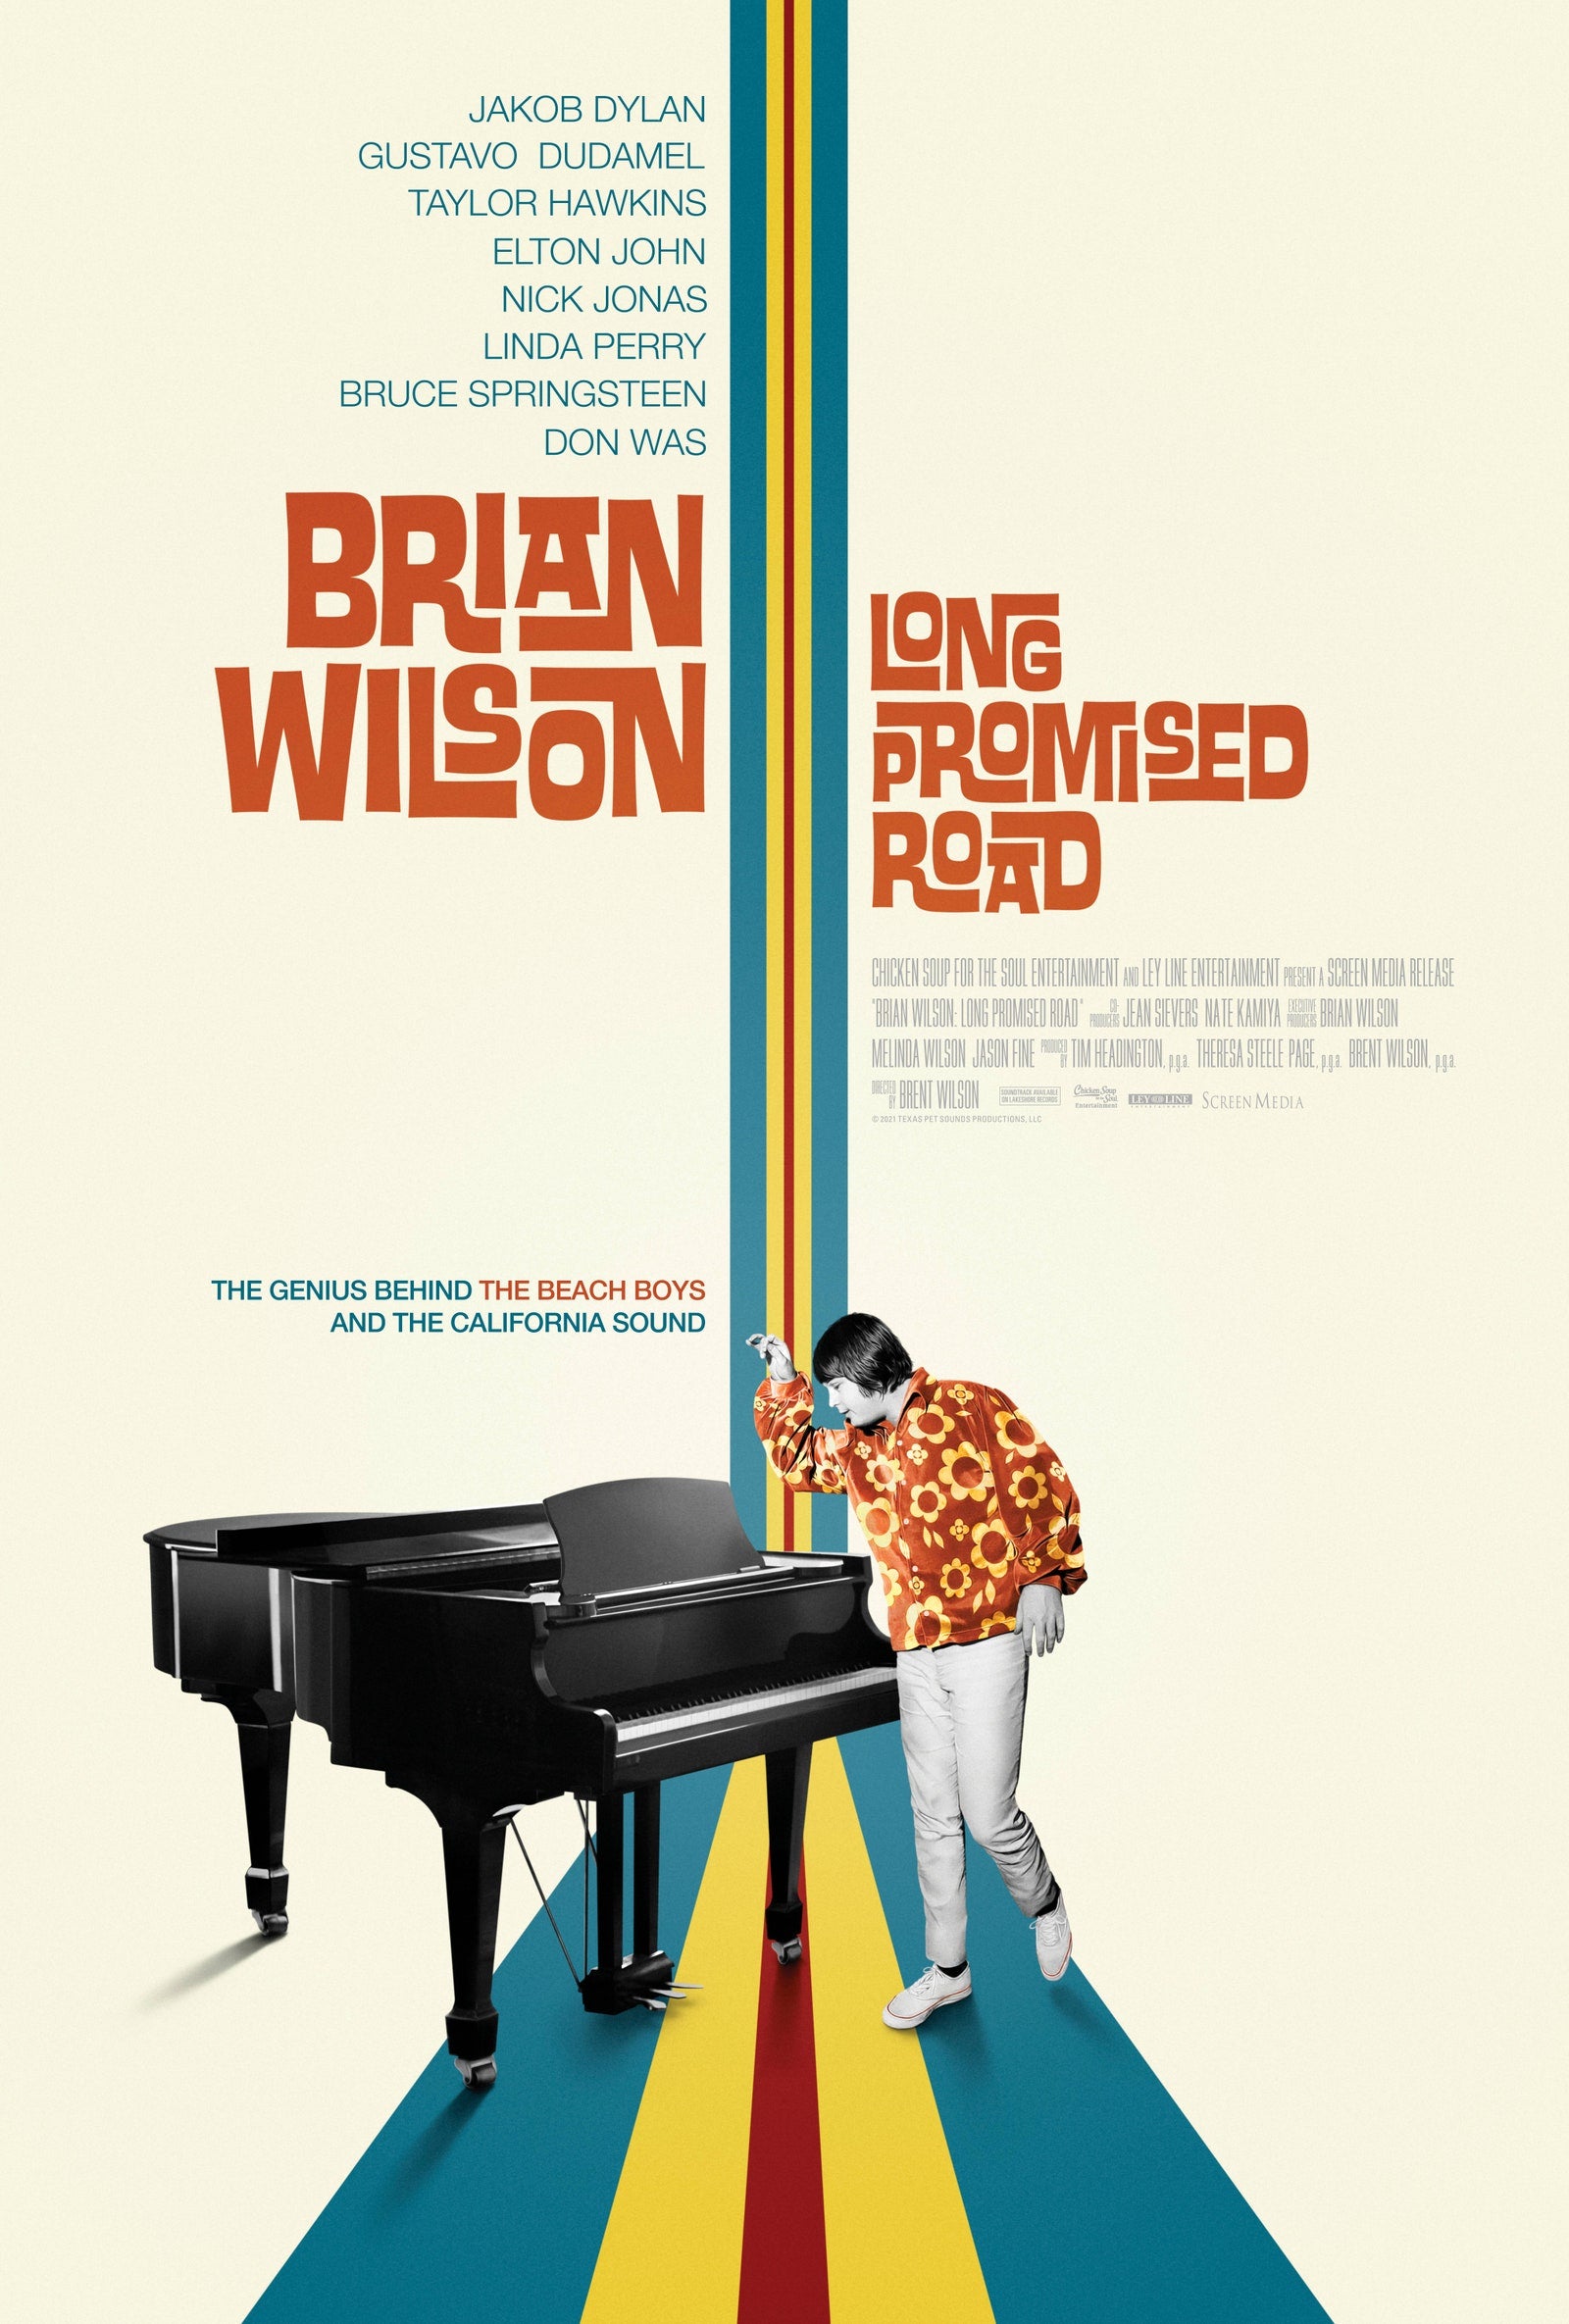 Watch Trailer For New Brian Wilson Documentary